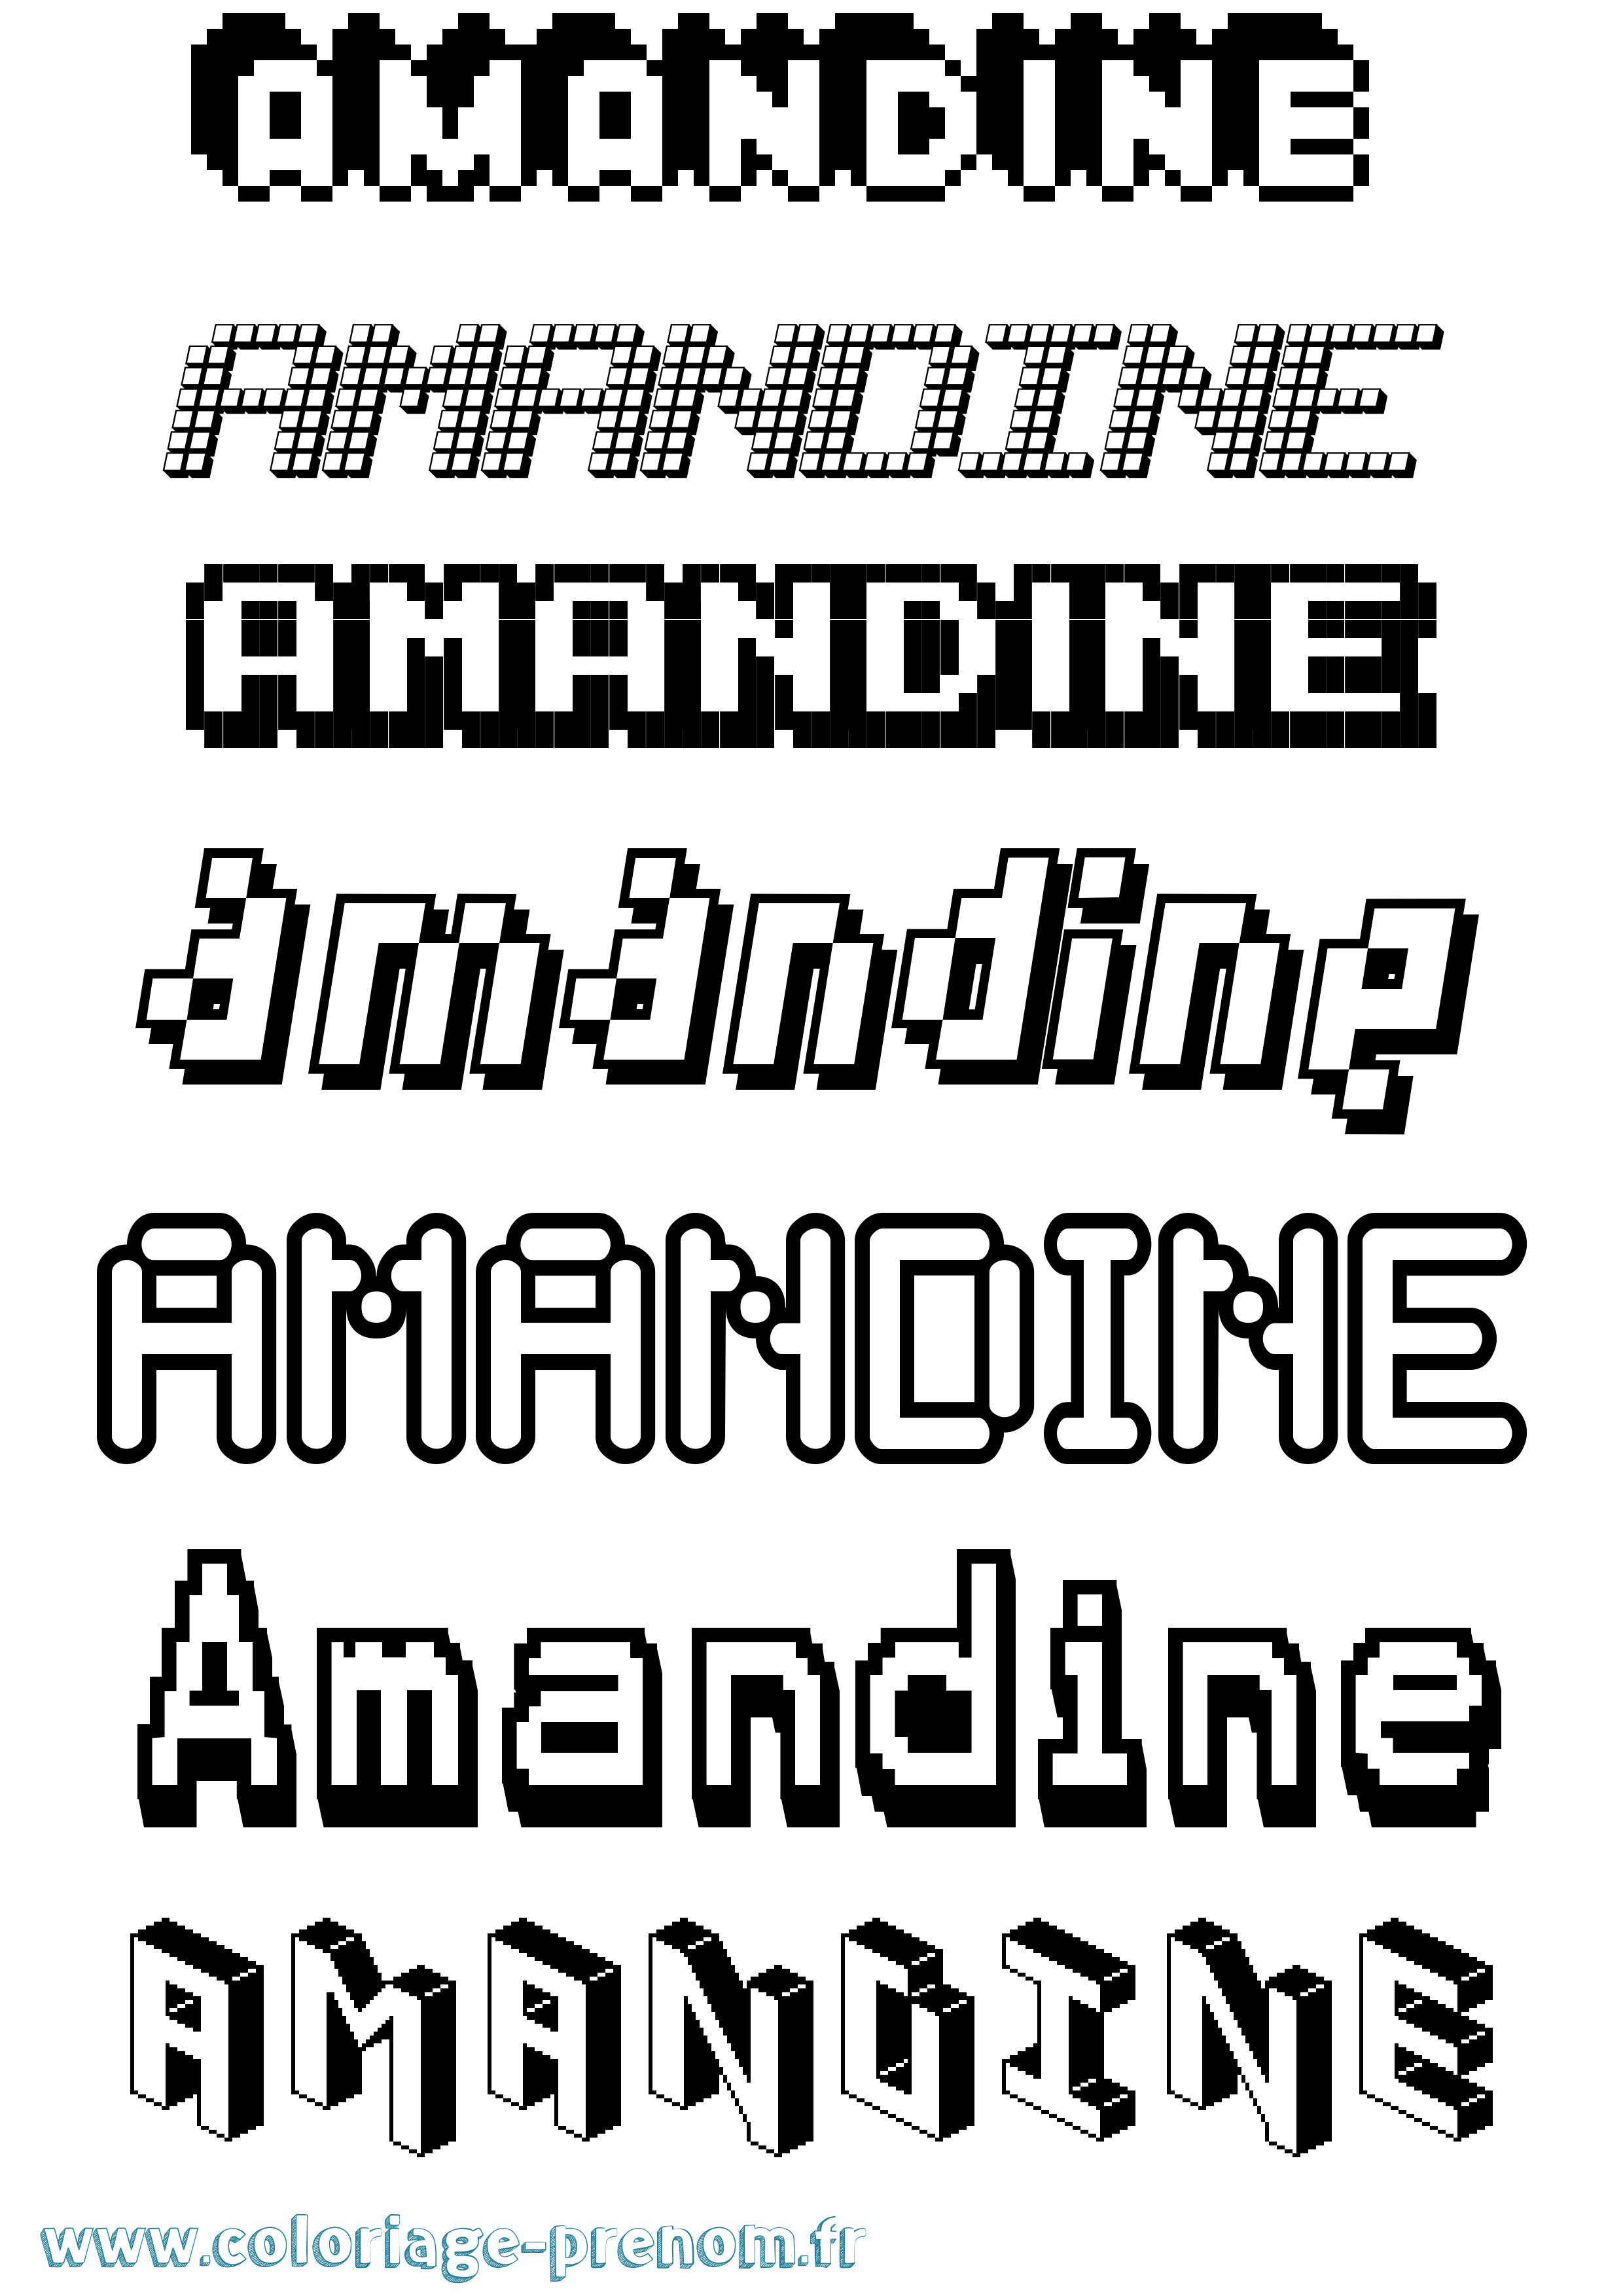 Coloriage prénom Amandine Pixel